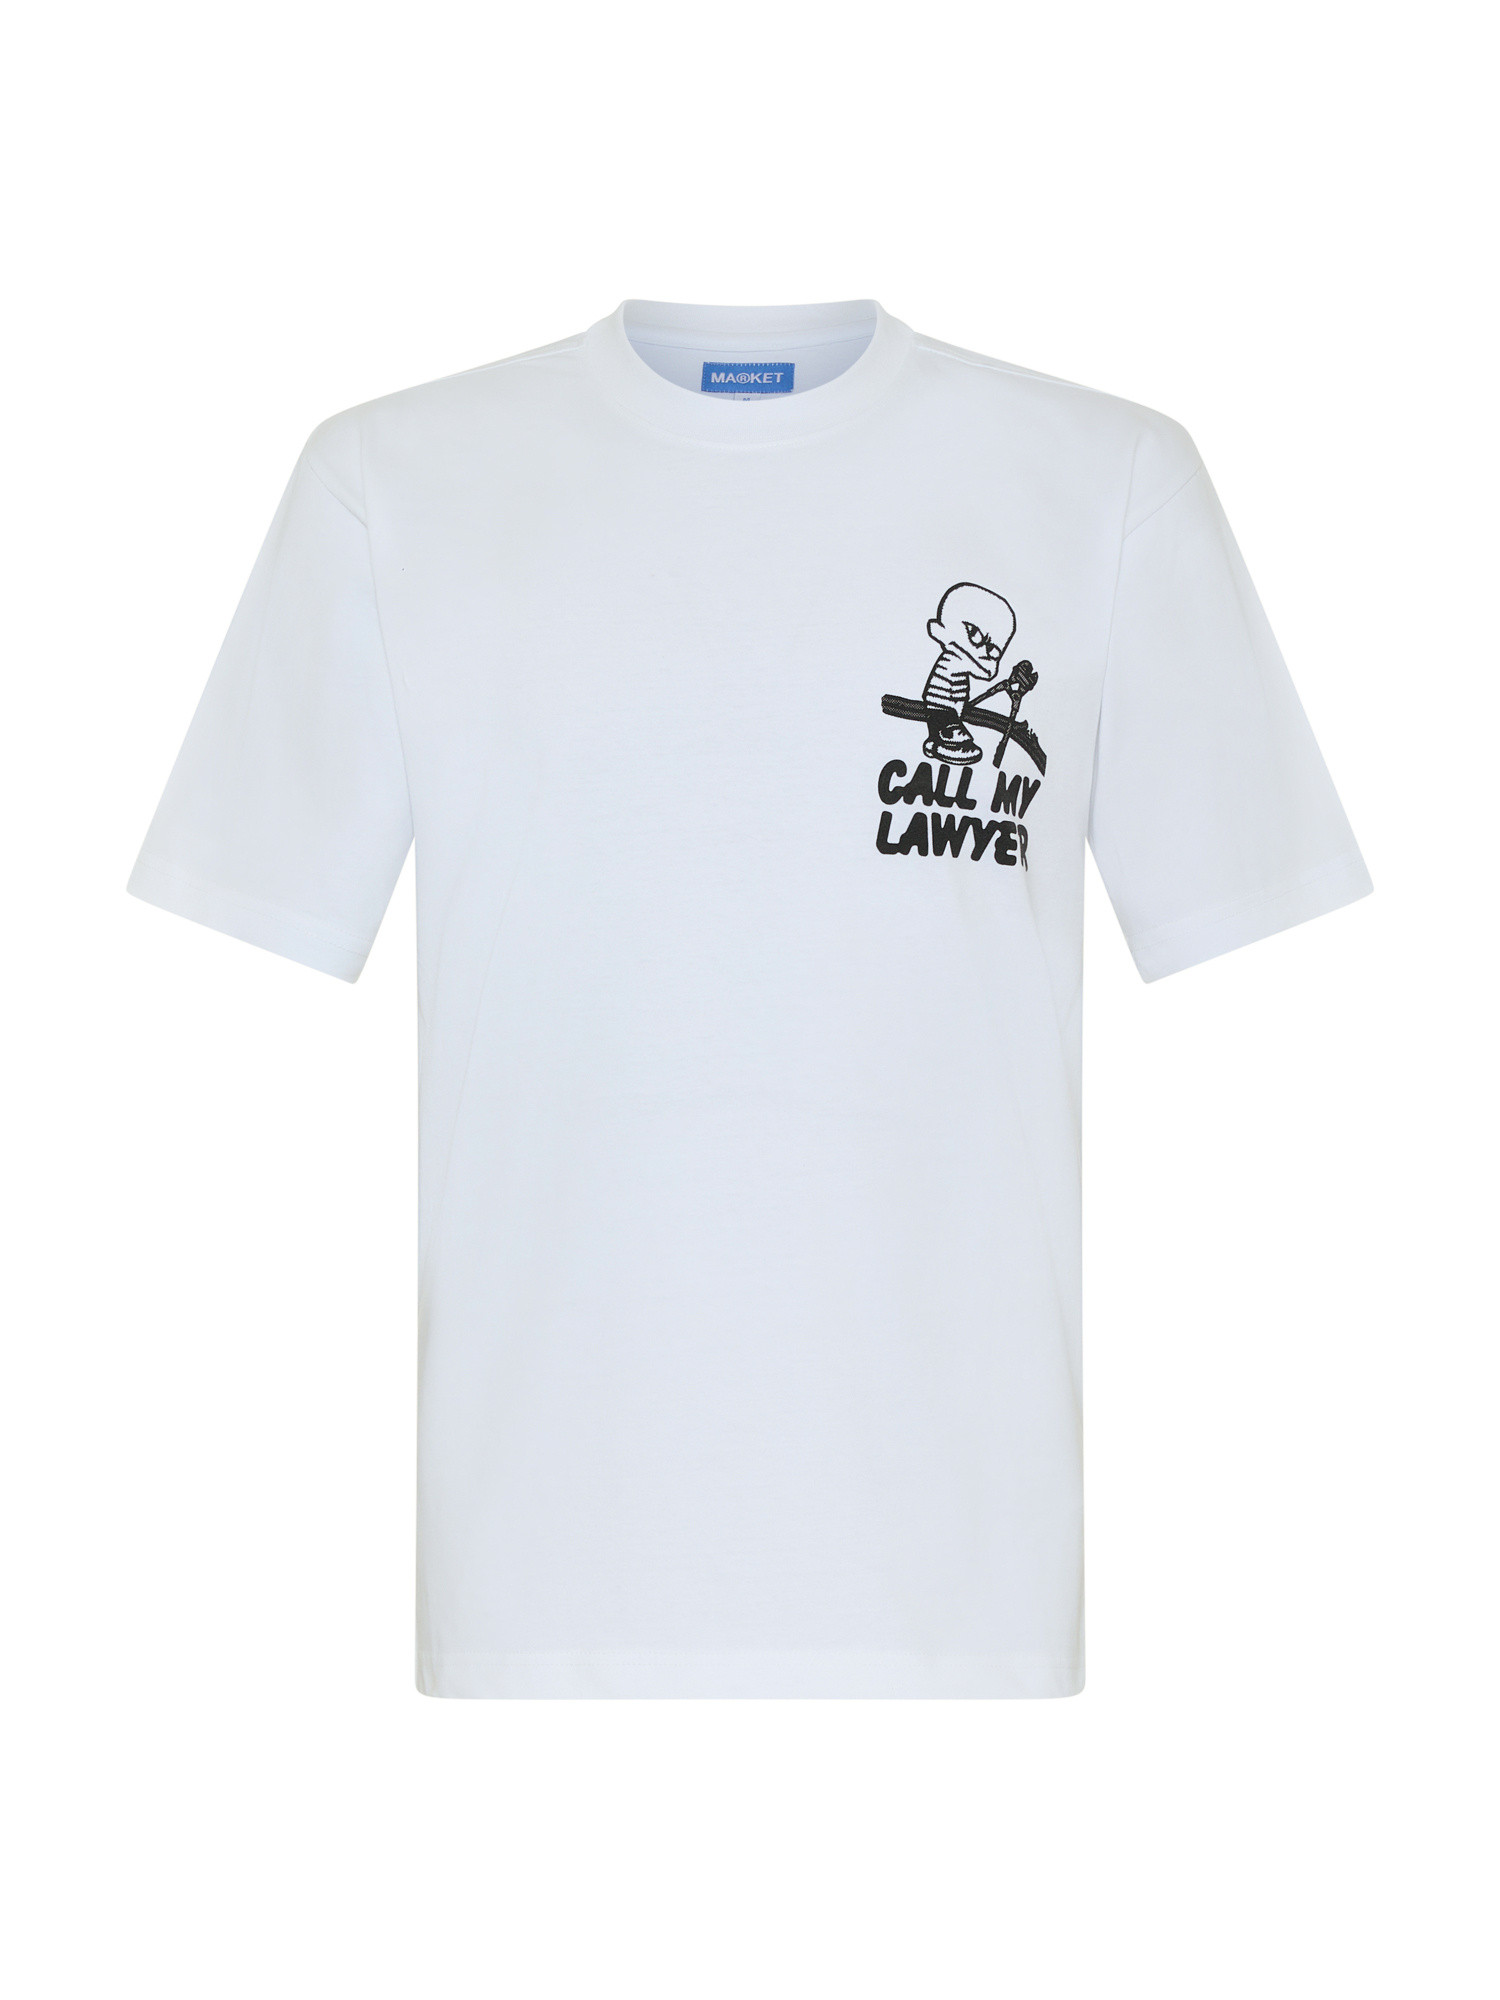 Market - Cotton T-shirt with print, Black, large image number 0